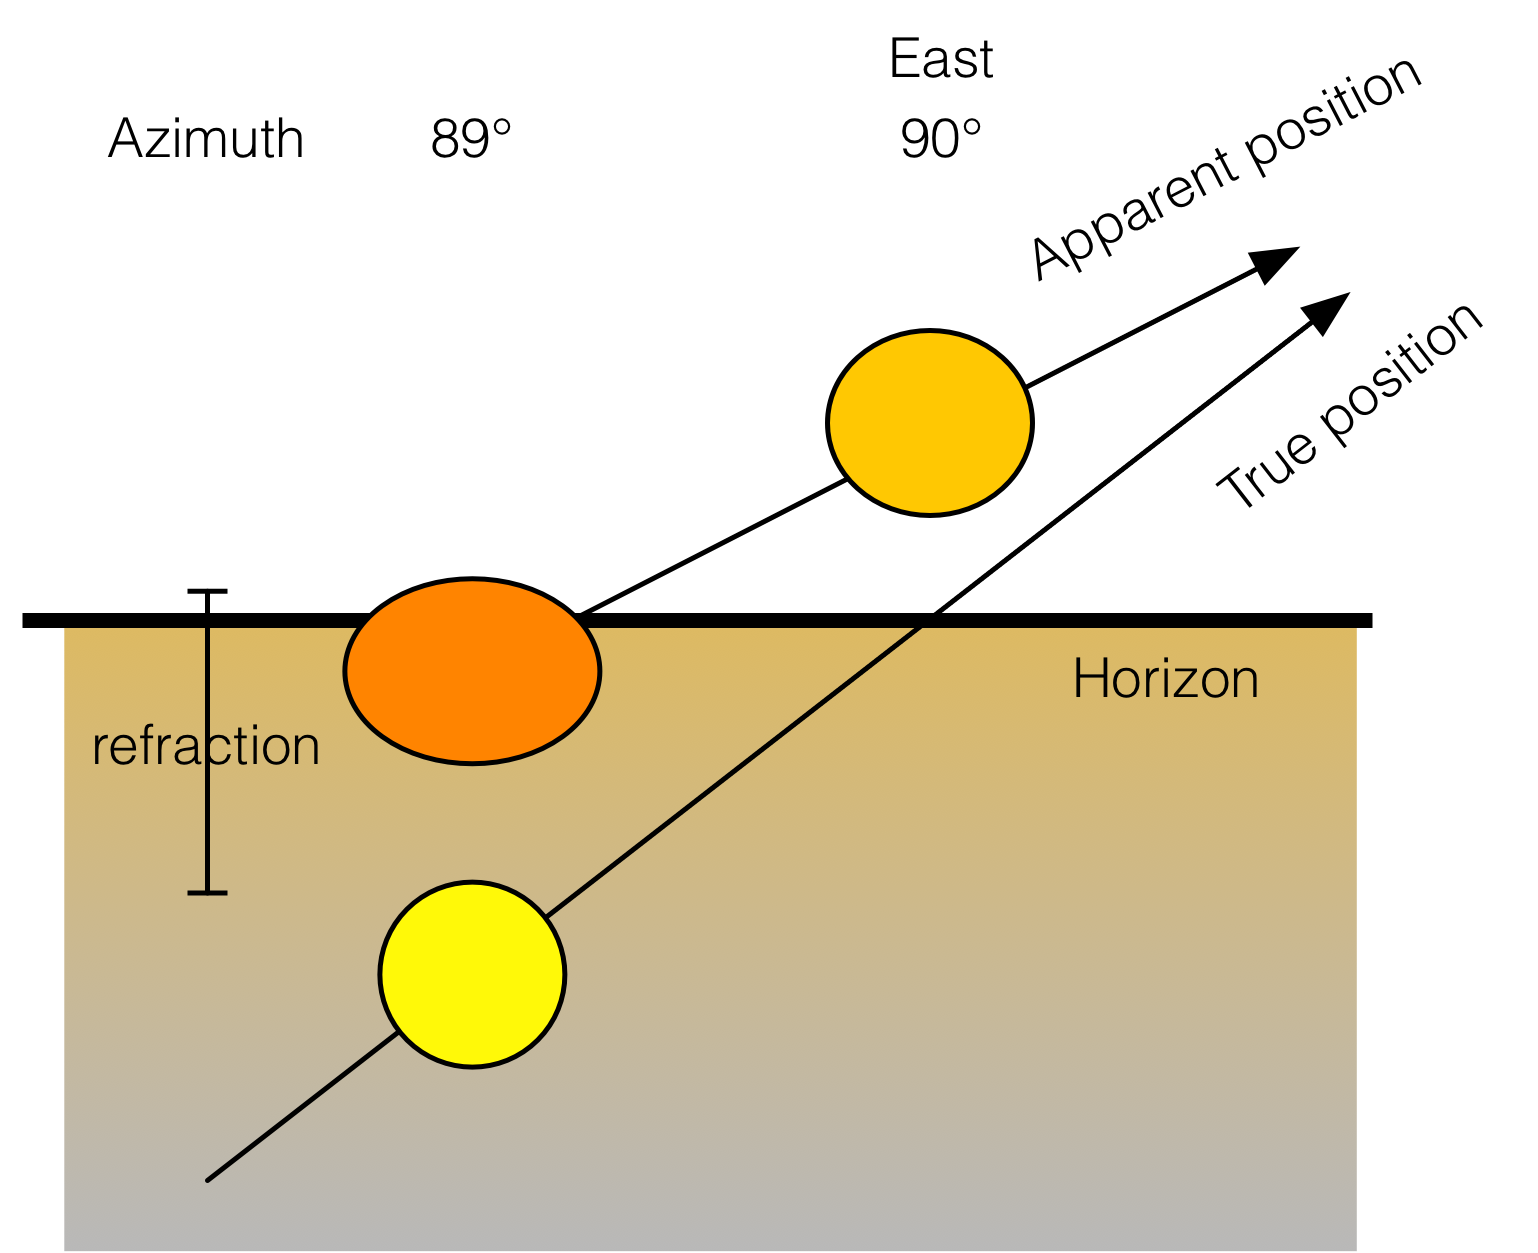 the sun - Equinox sunrise sunset direction - Astronomy Stack Exchange